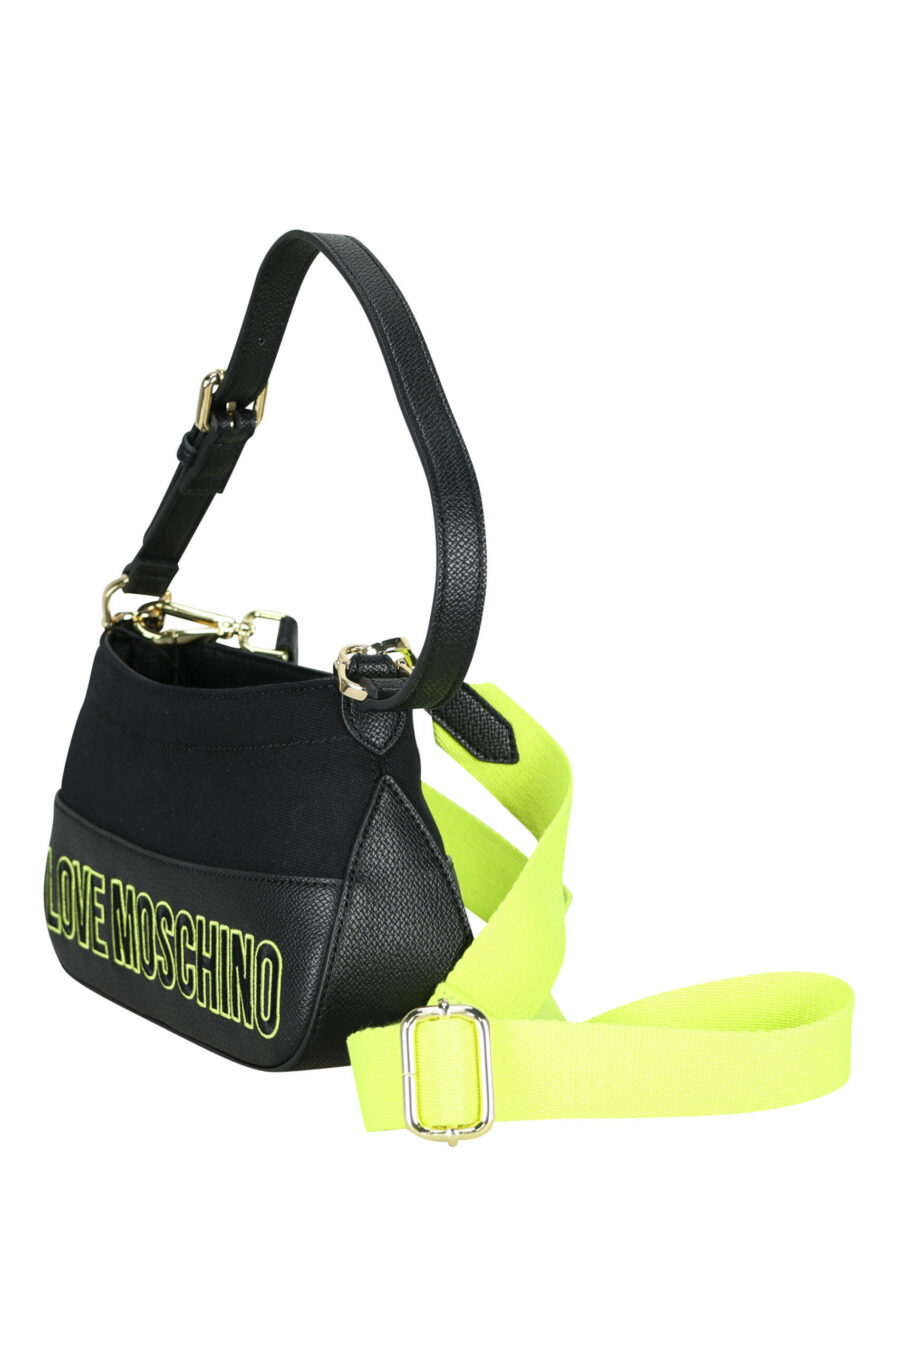 Shoulder bag with lime green maxilogo - 8054388070782 1 scaled